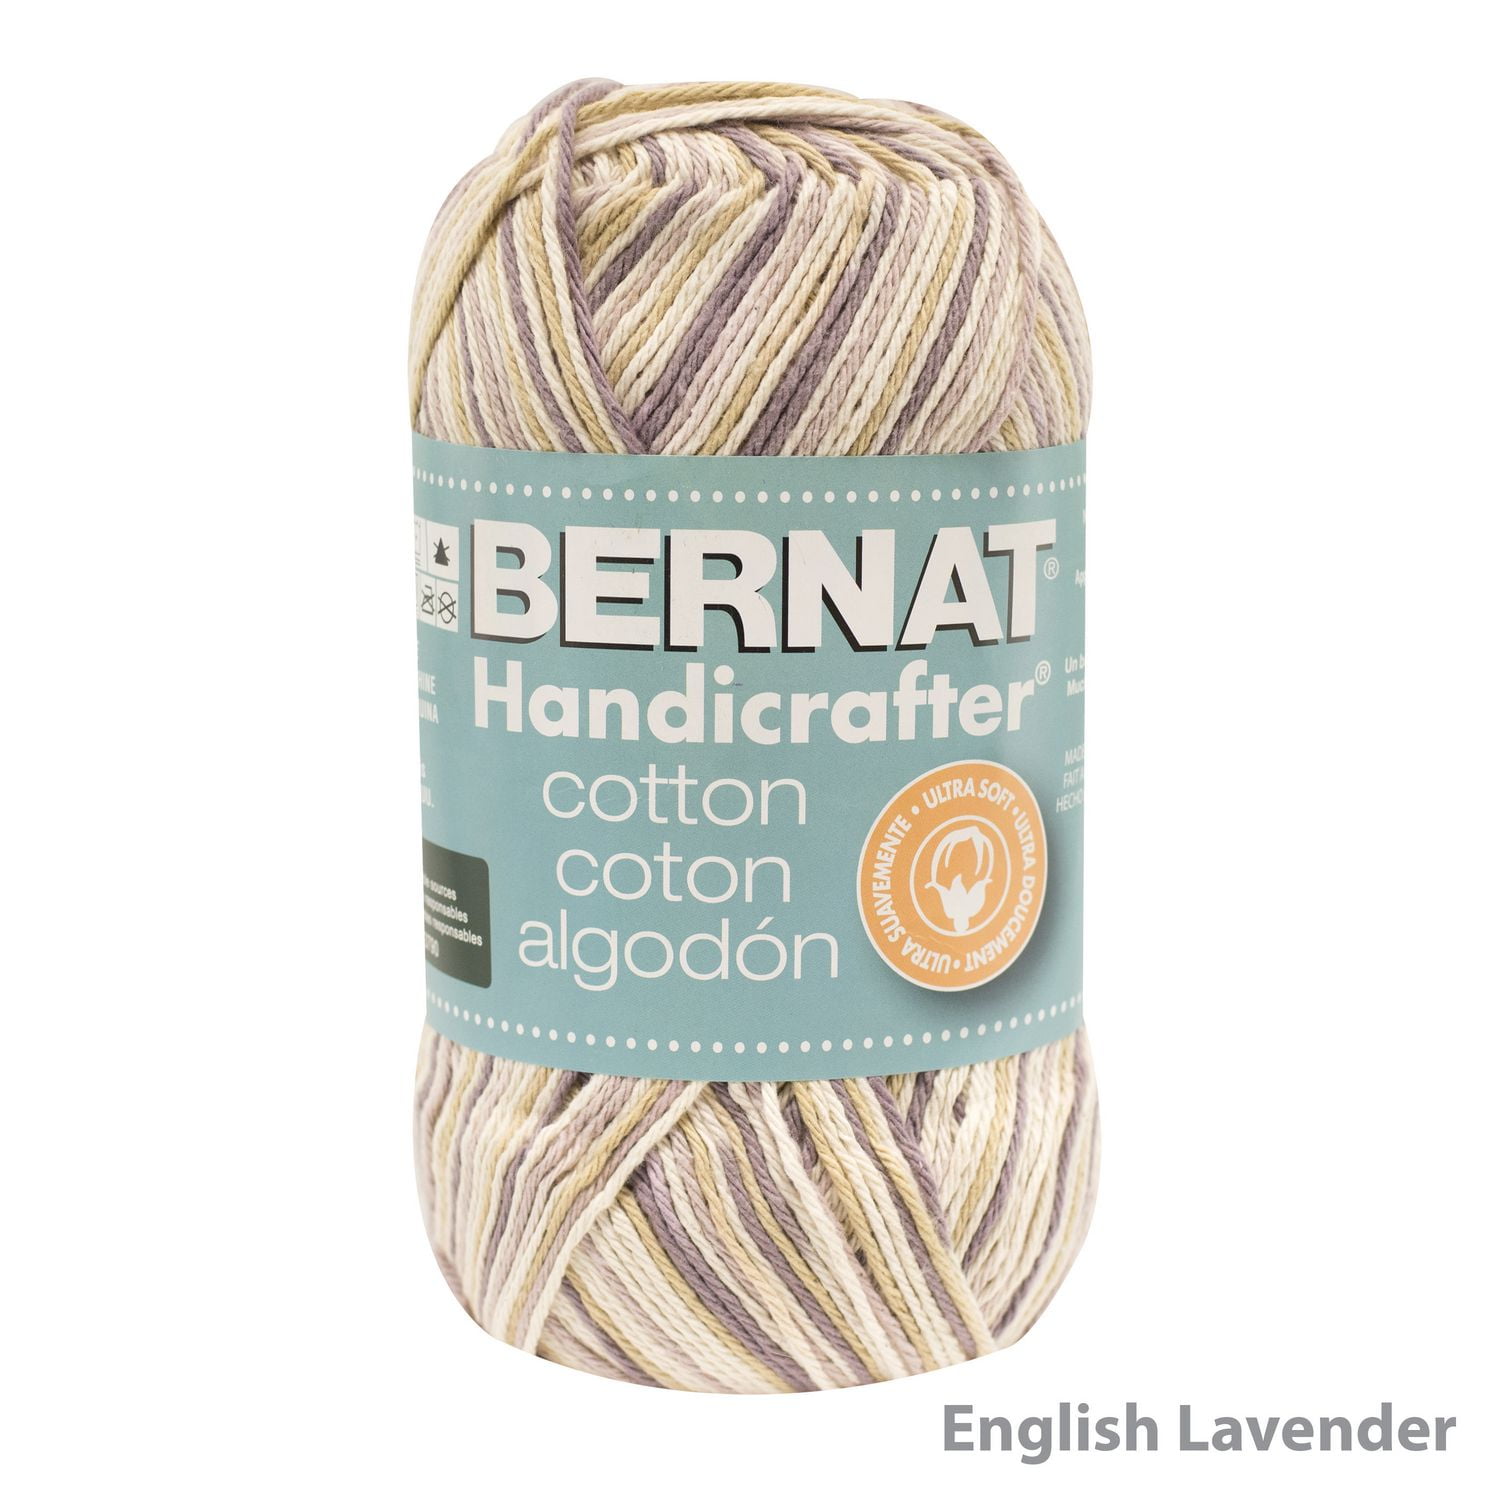 Bernat Handicrafter Cotton Big Ball Yarn 